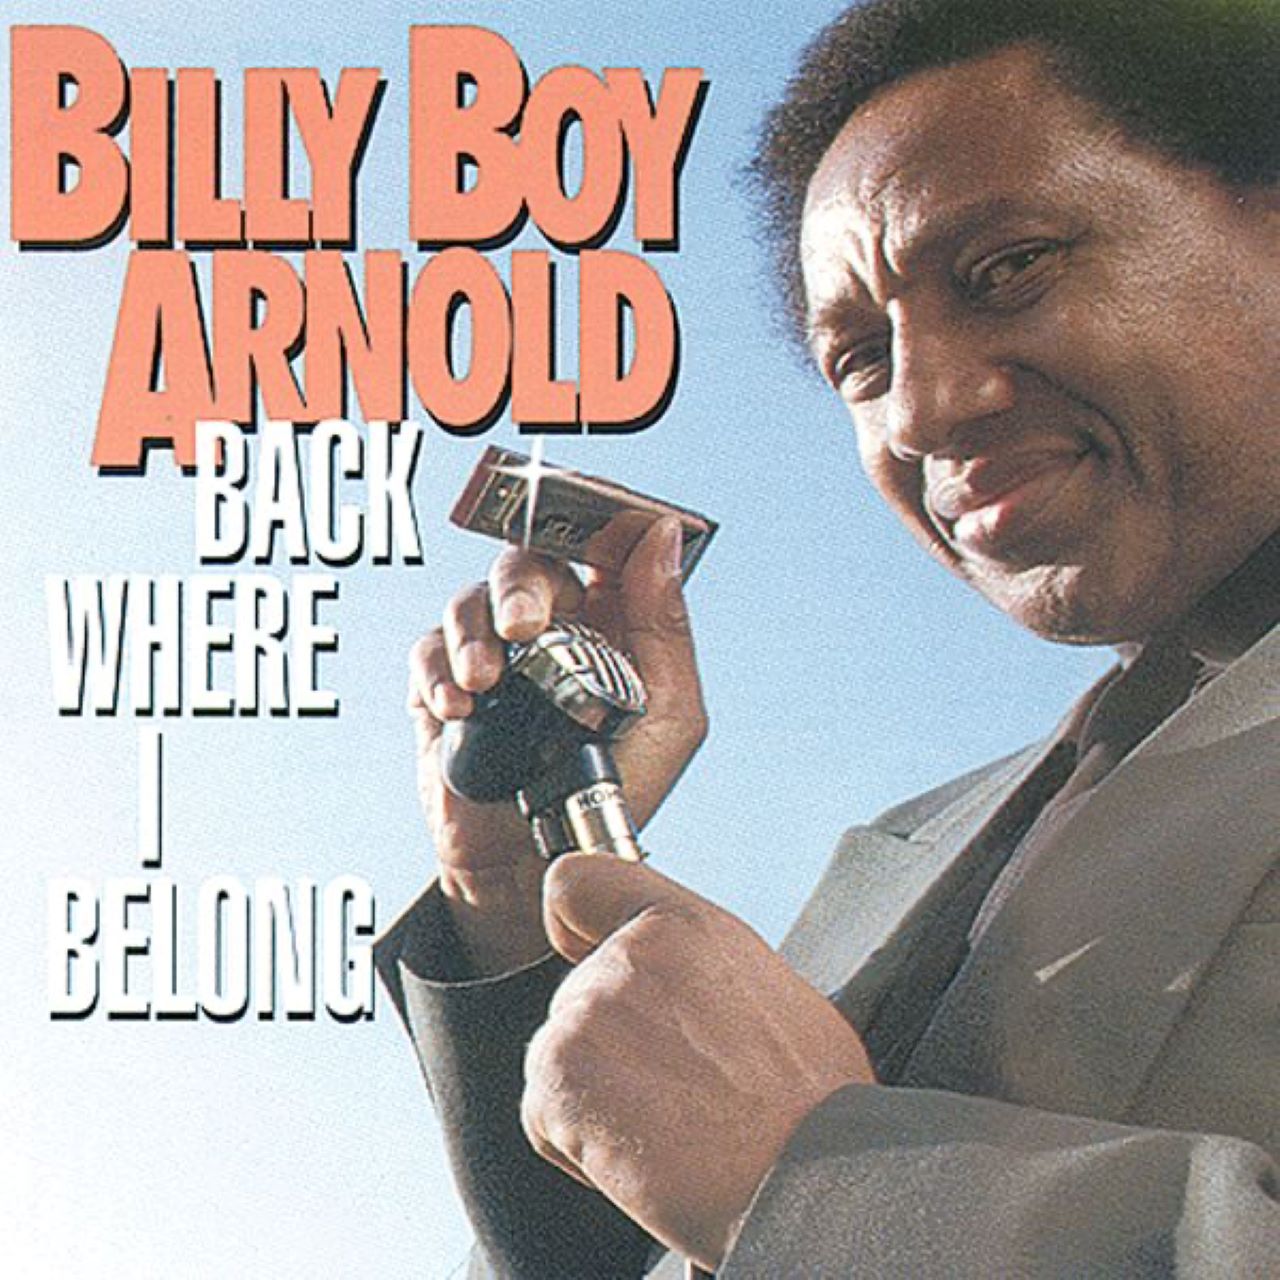 Billy Boy Arnold – Back Where I Belong cover album